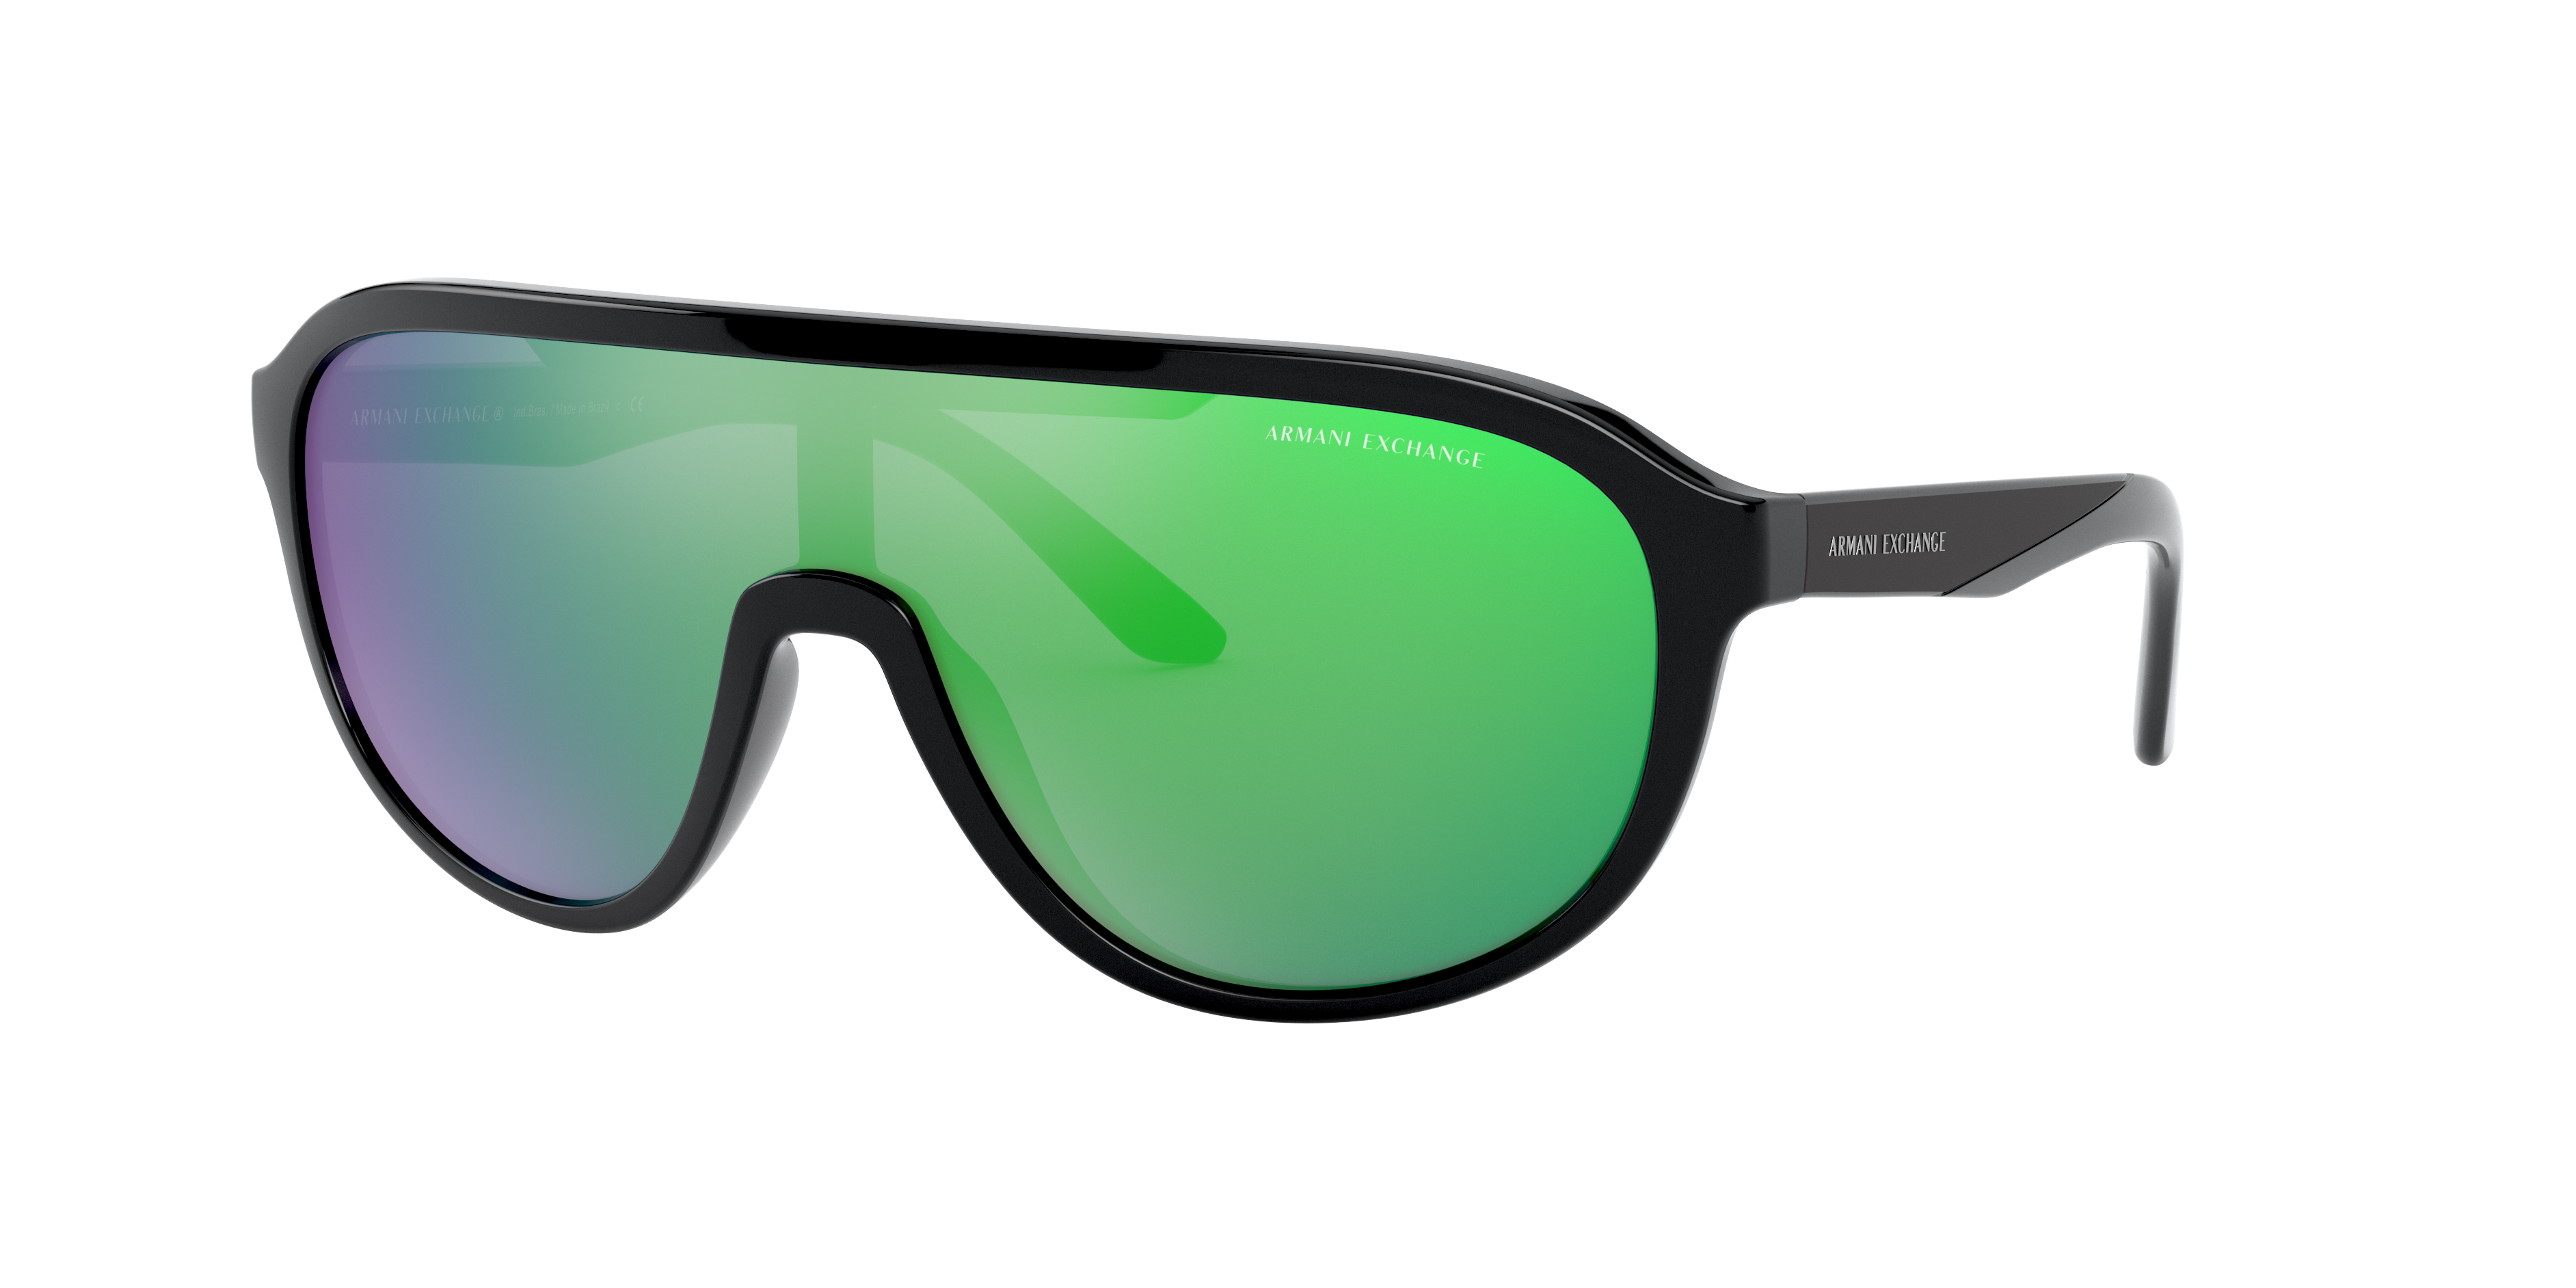 Angle_Left01 Armani Exchange AX 4099S Sunglasses Green / Black